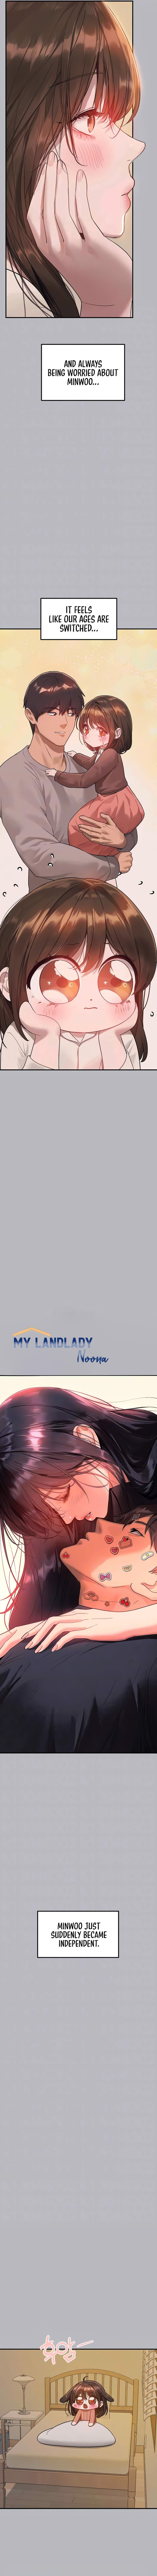 My Landlady Noona - Chapter 136 Page 2